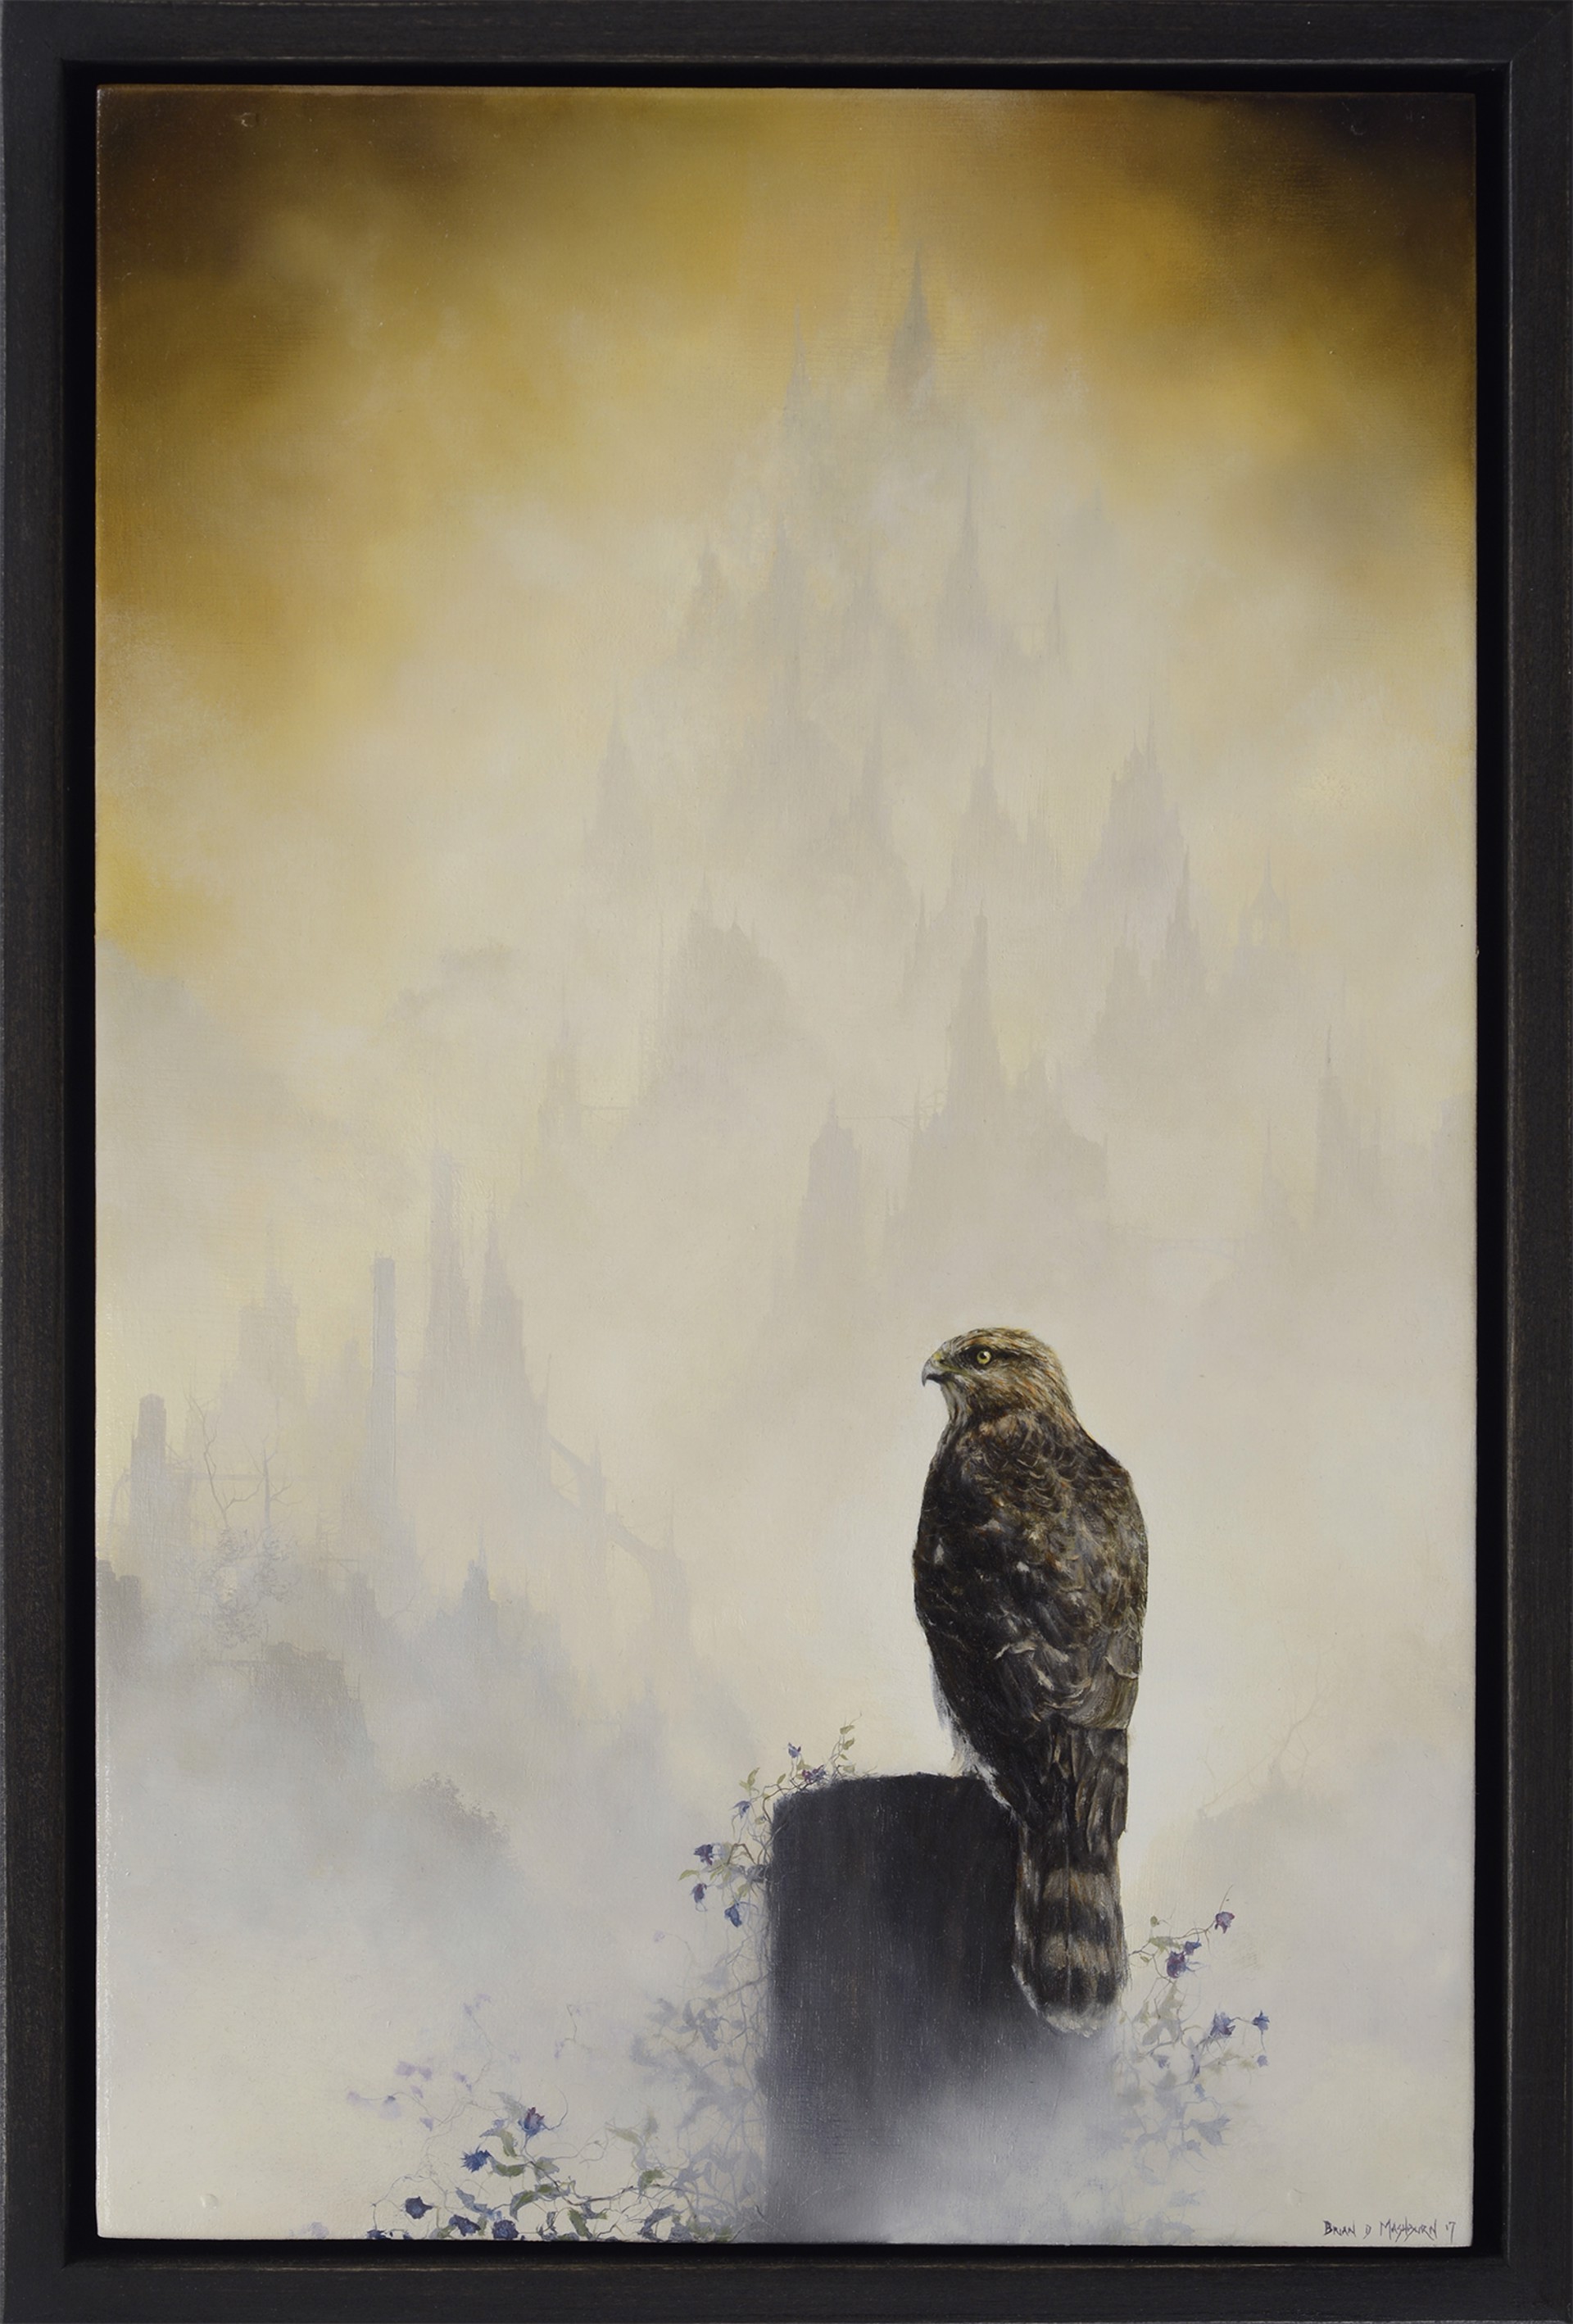 Cooper's Hawk by Brian Mashburn